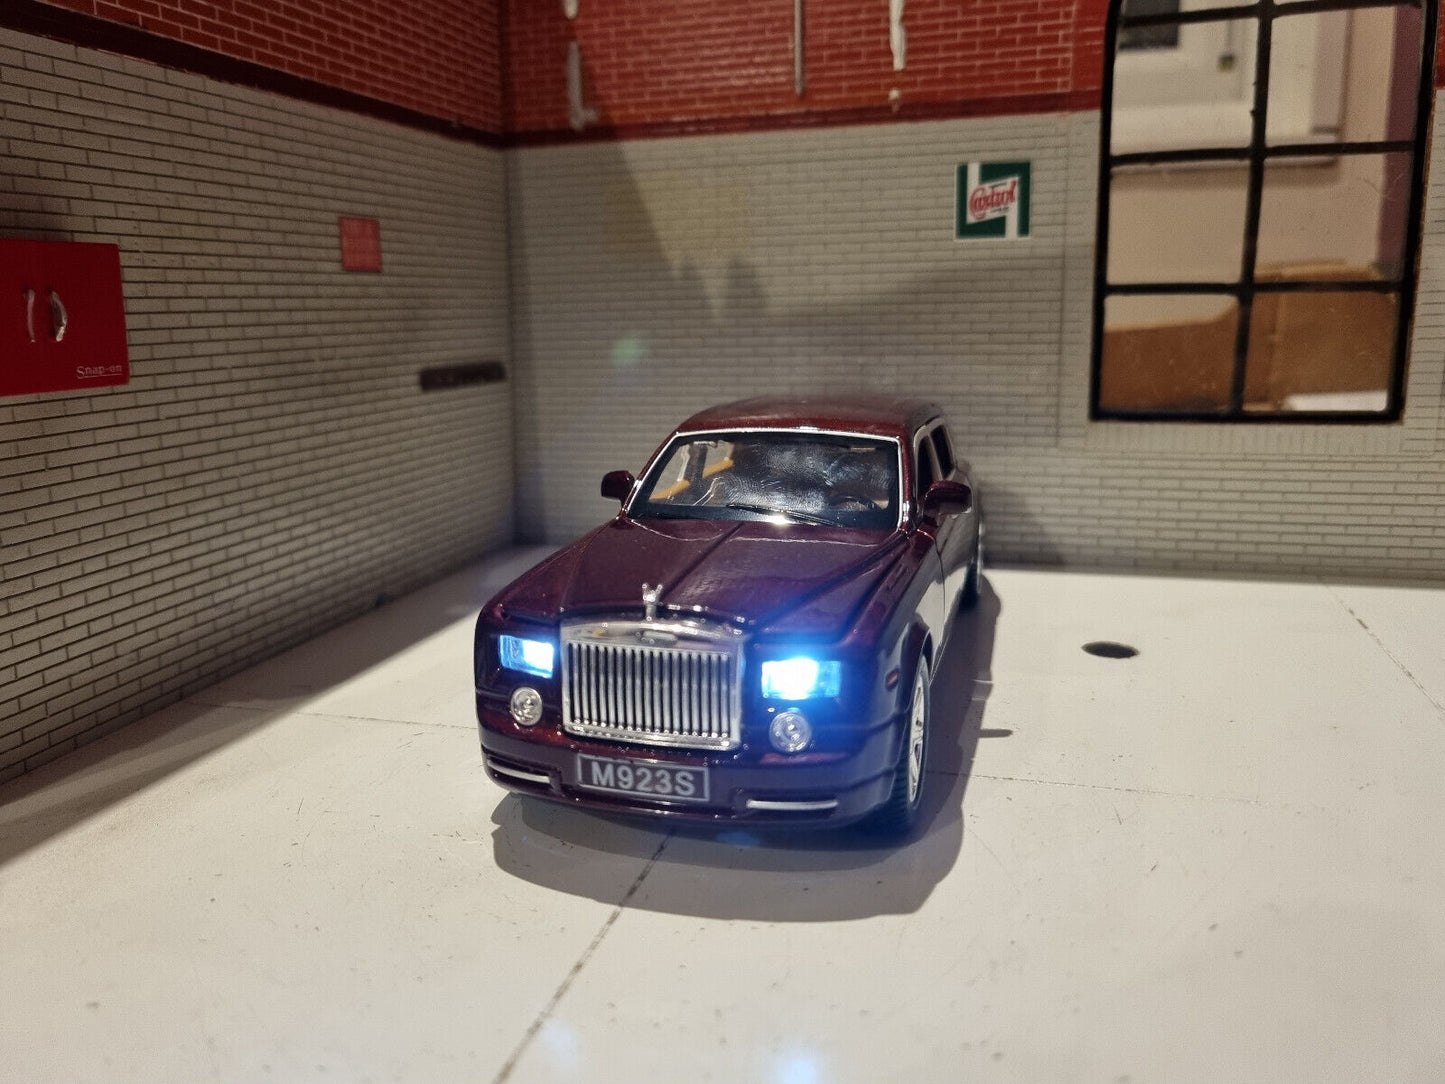 Rolls Royce 2018 Phantom M923S-6 XLG 1:24/1:32